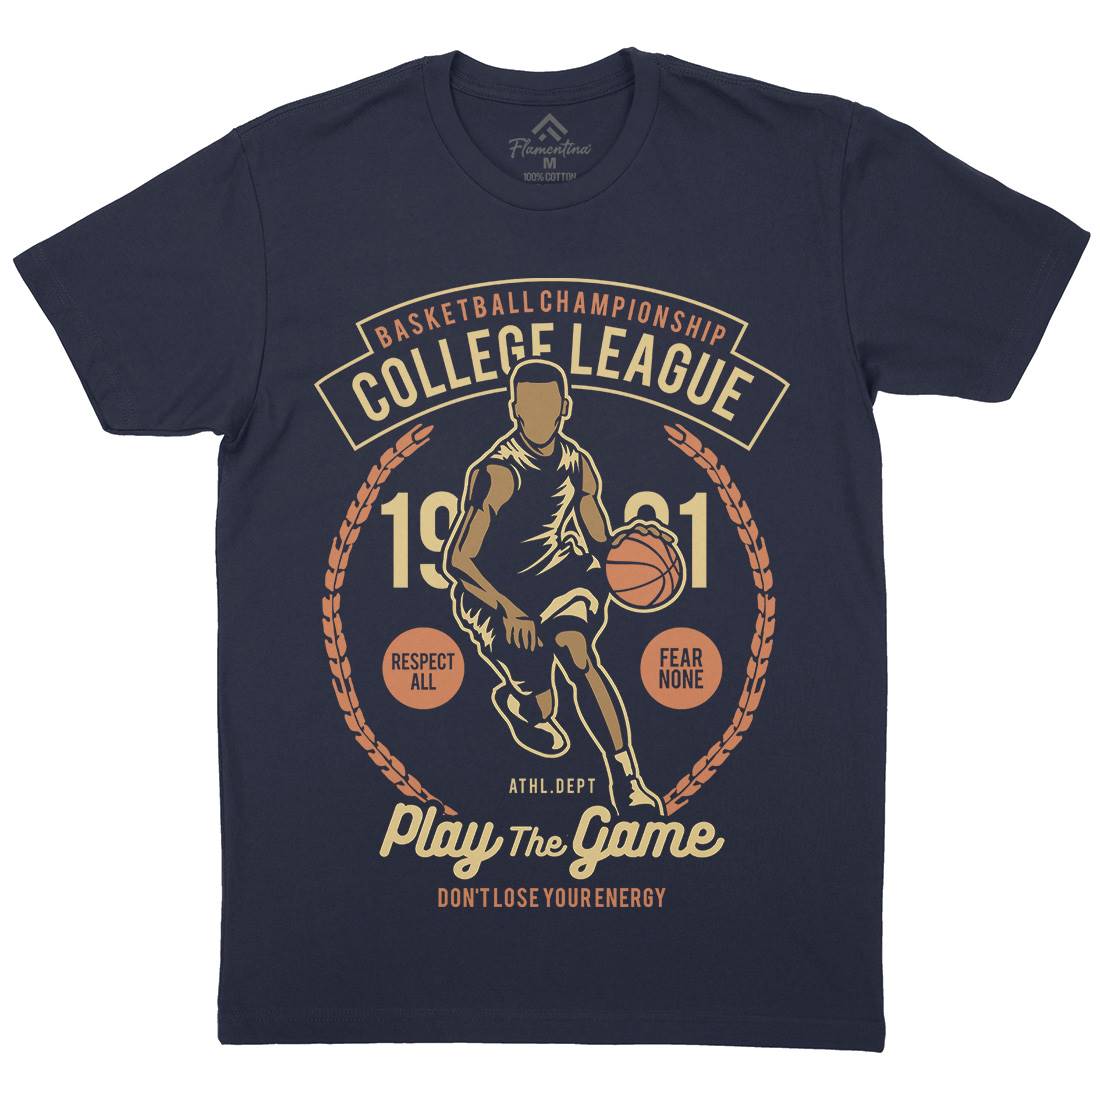 College League Mens Crew Neck T-Shirt Sport B197